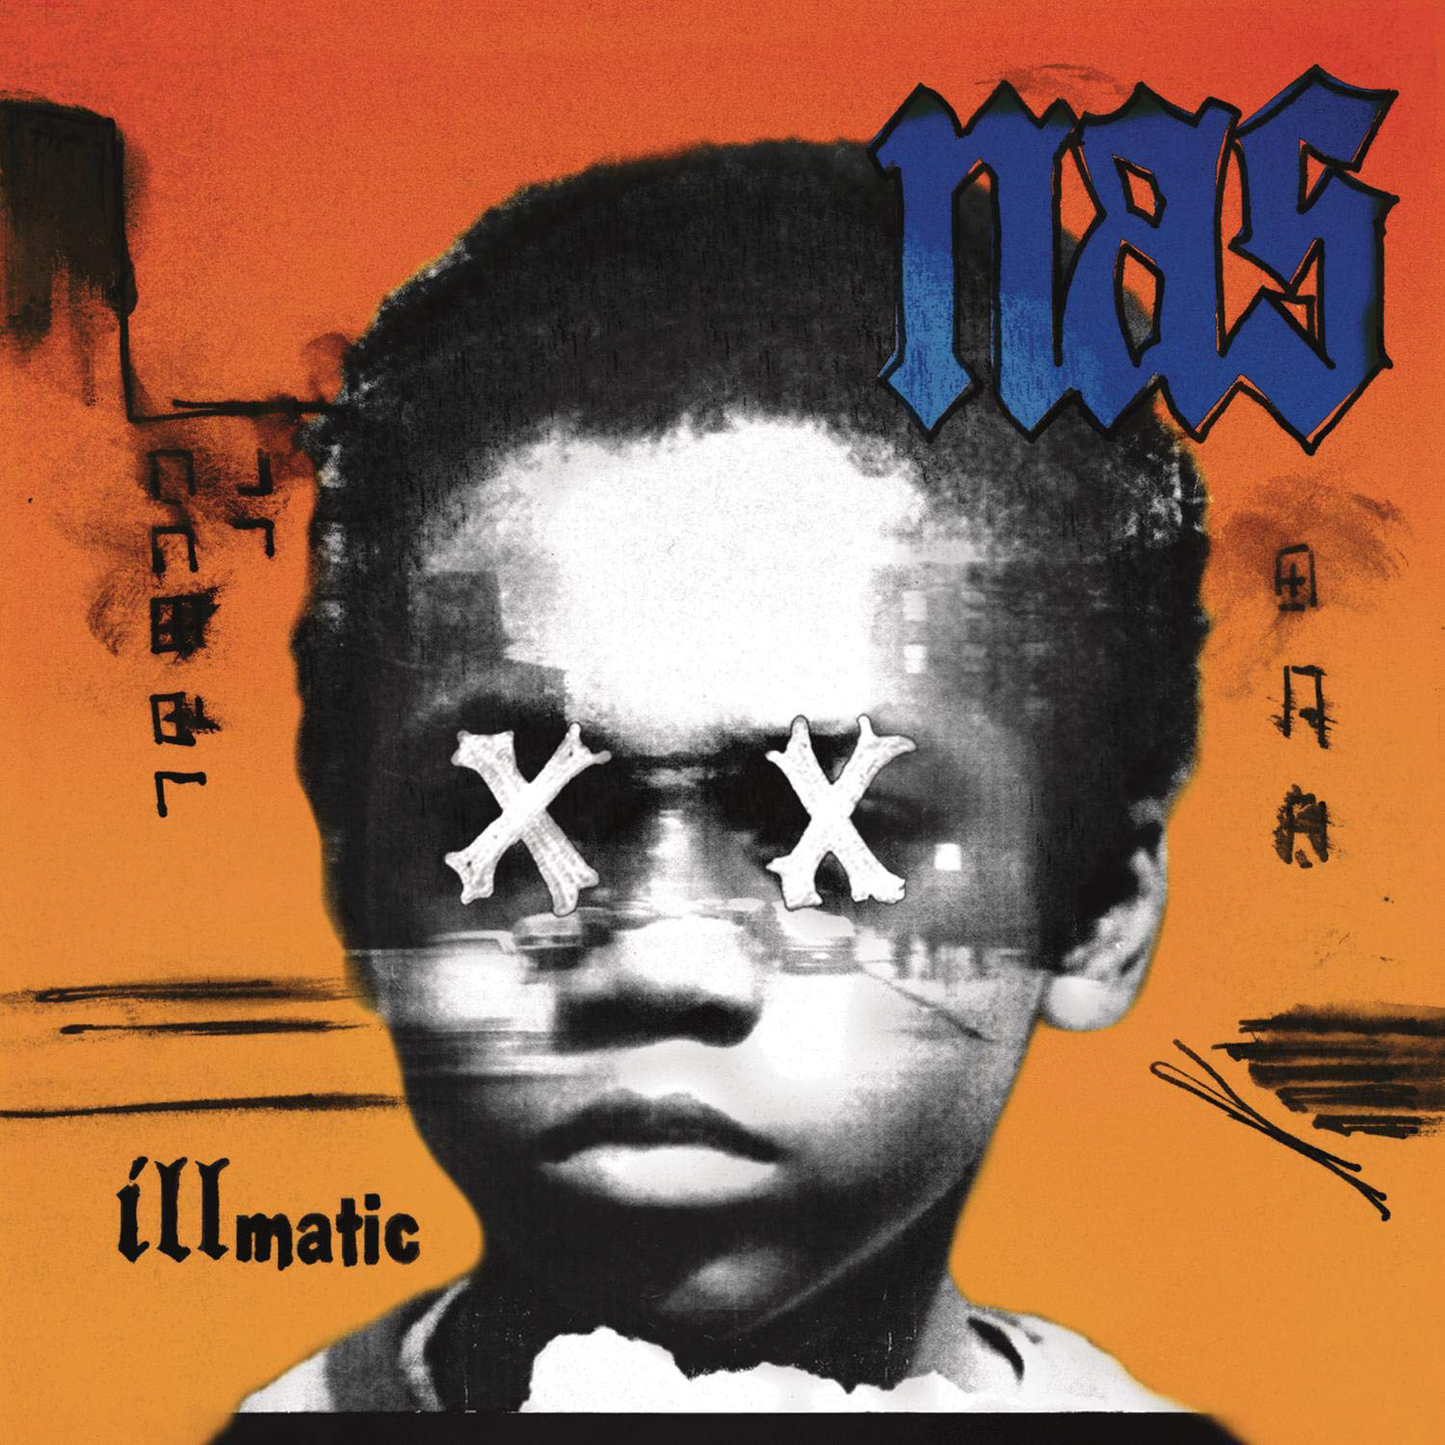 Nas / Illmatic XX (180 Gram Vinyl, Digital Download Card) [Explicit Content]